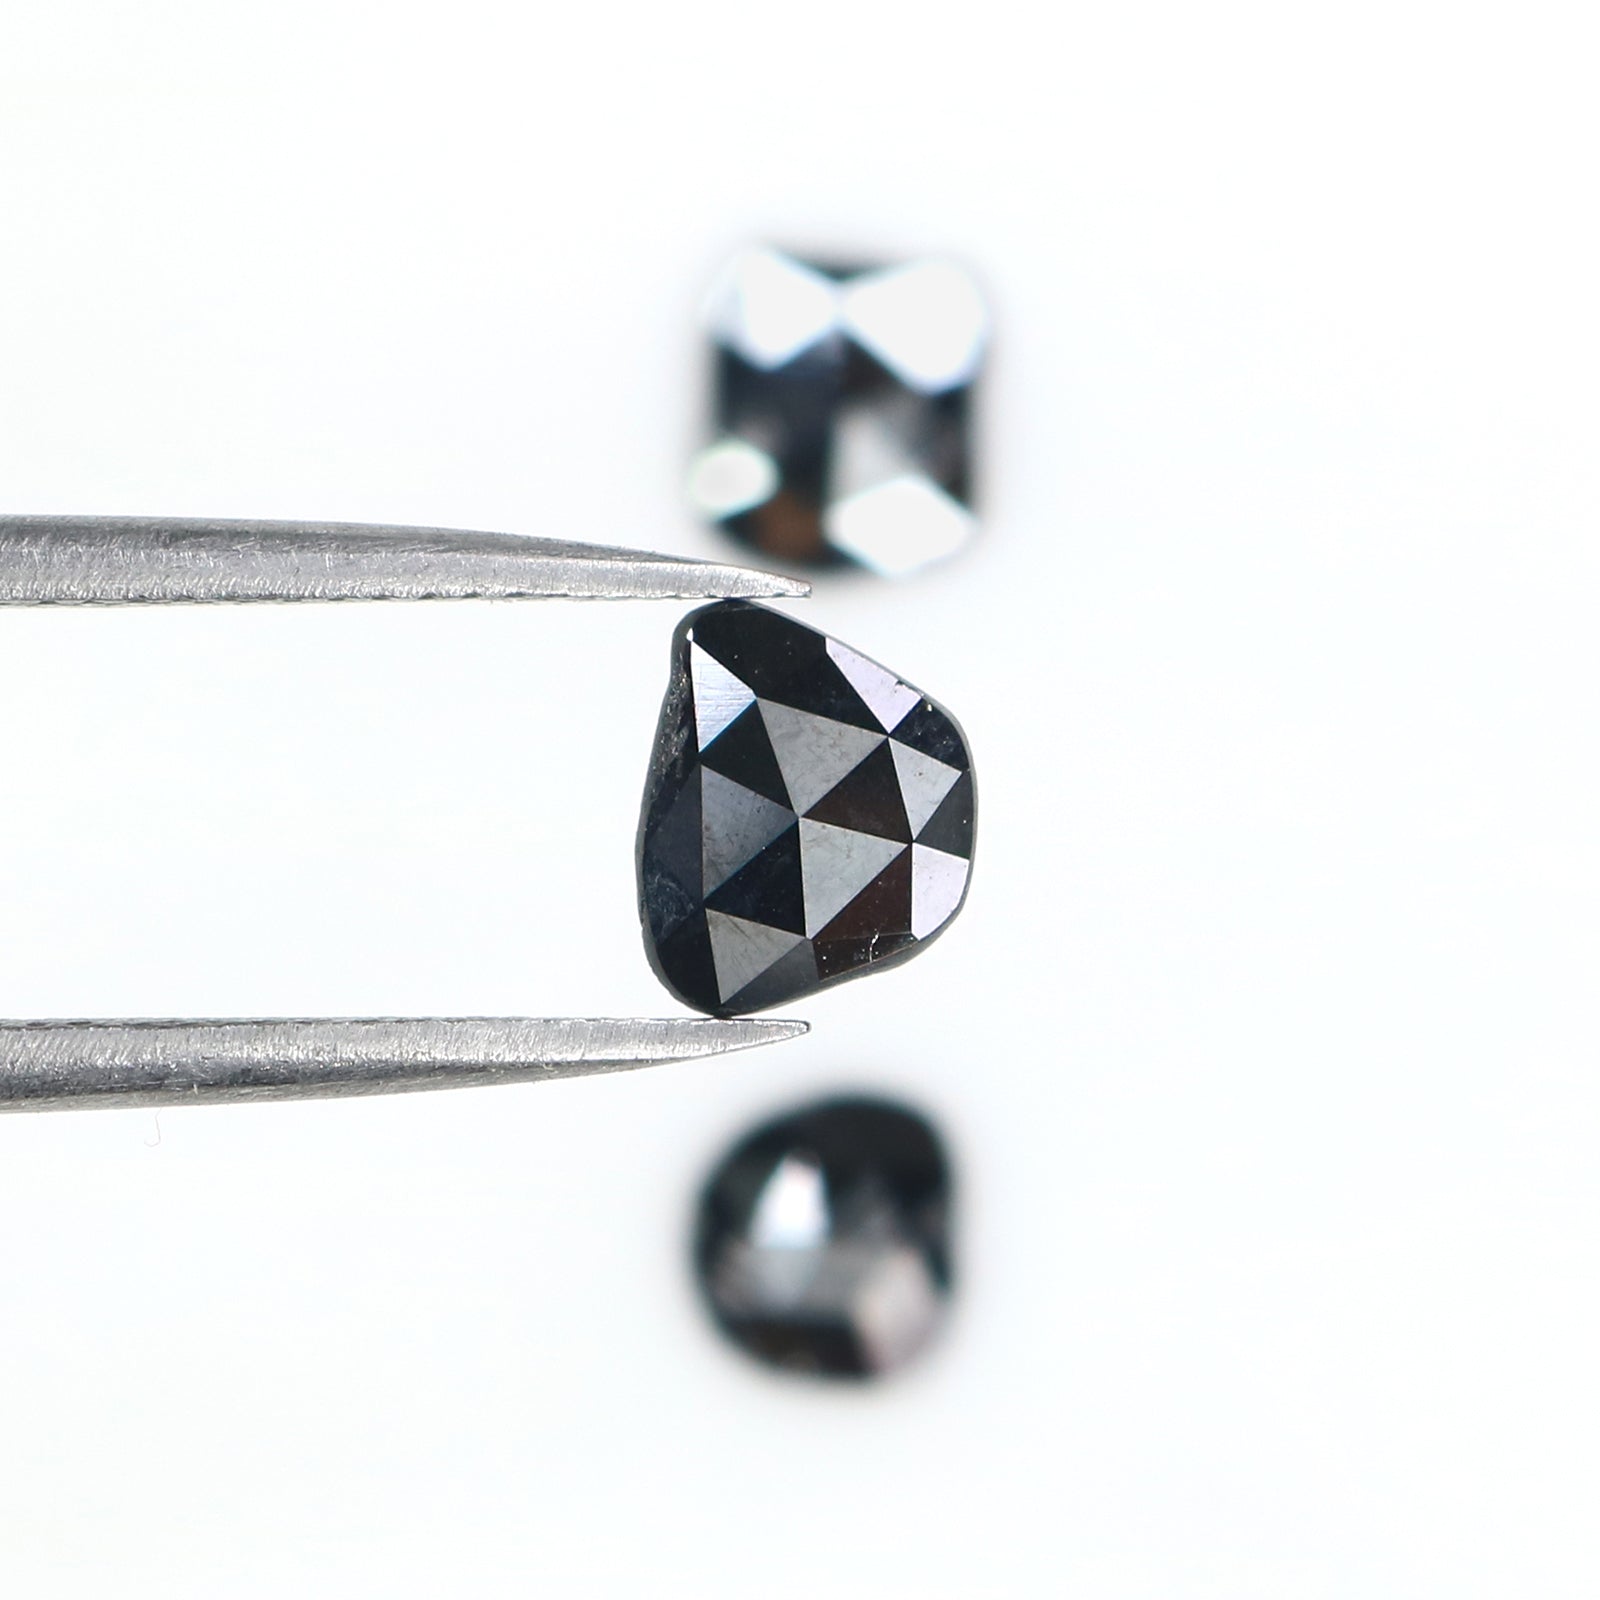 Natural Loose Slice Black Color Diamond 1.60 CT 7.56 MM Slice Shape Rose Cut Diamond L2670